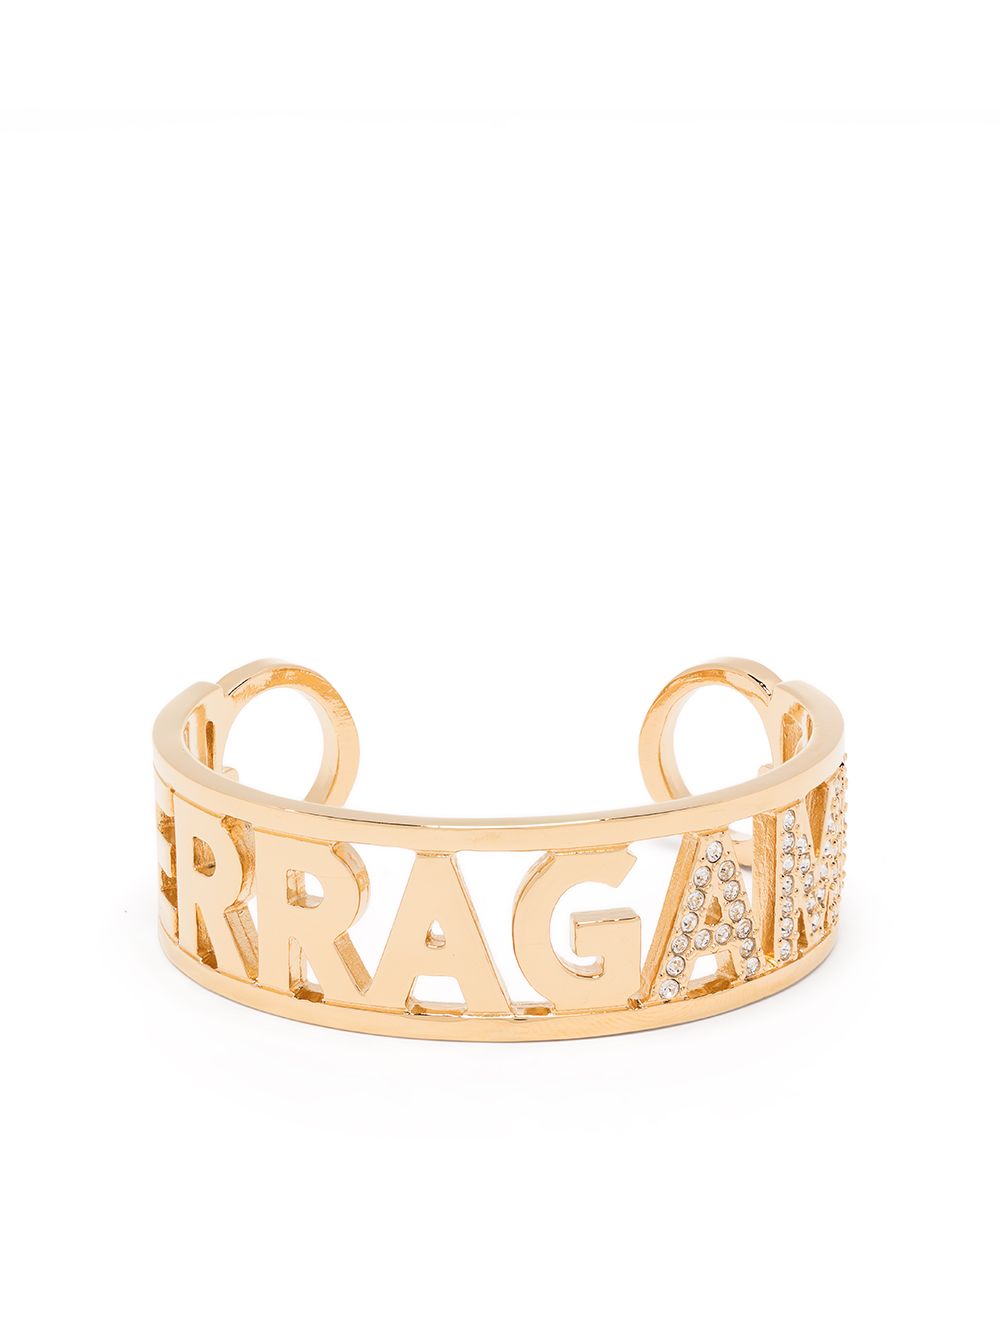 Ferragamo rhinestone-embellished cuff bracelet